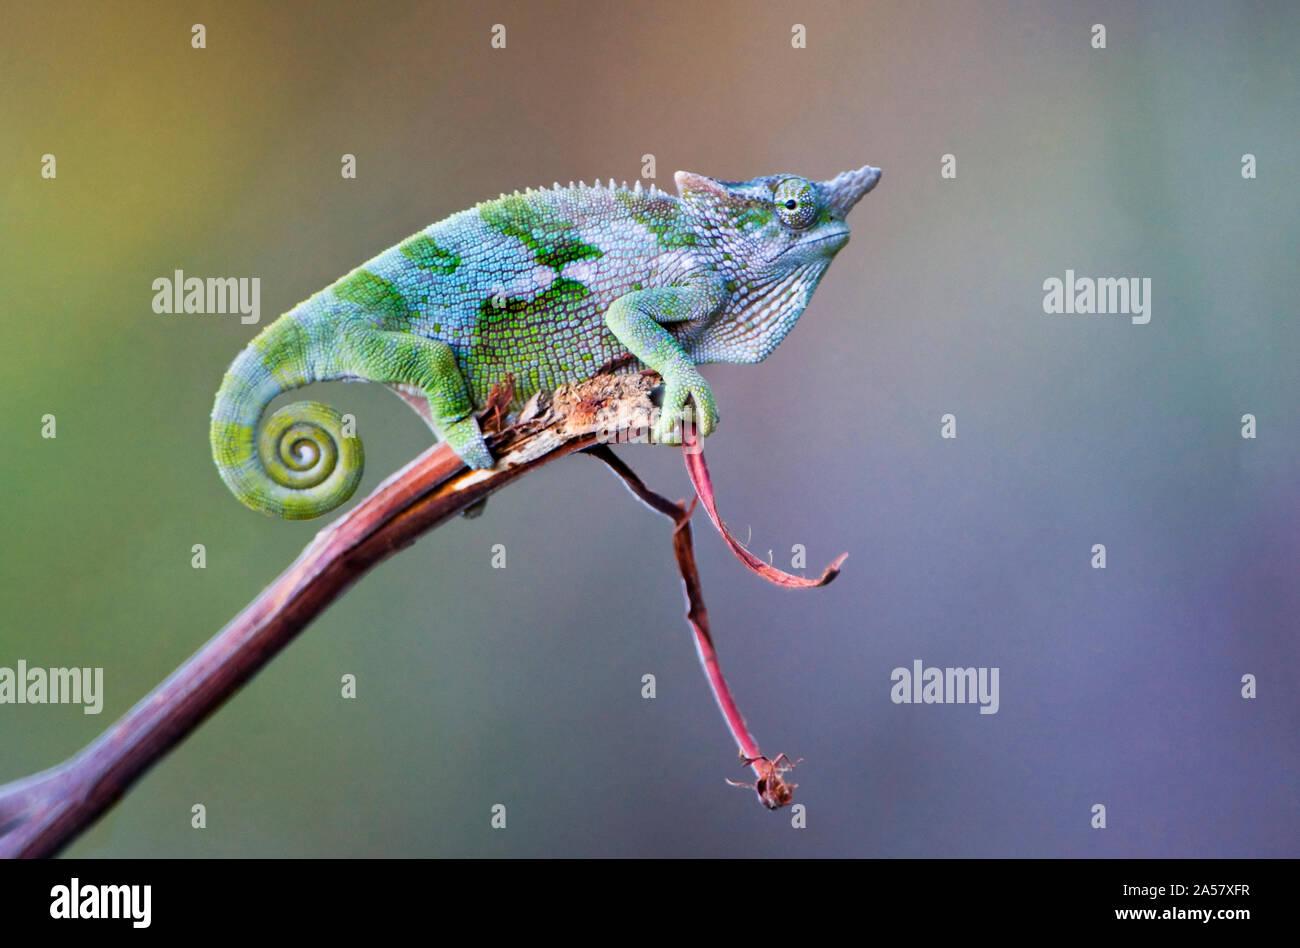 Dwarf chameleon (Bradypodion) on a twig, Usambara Mountains, Tanzania Stock Photo